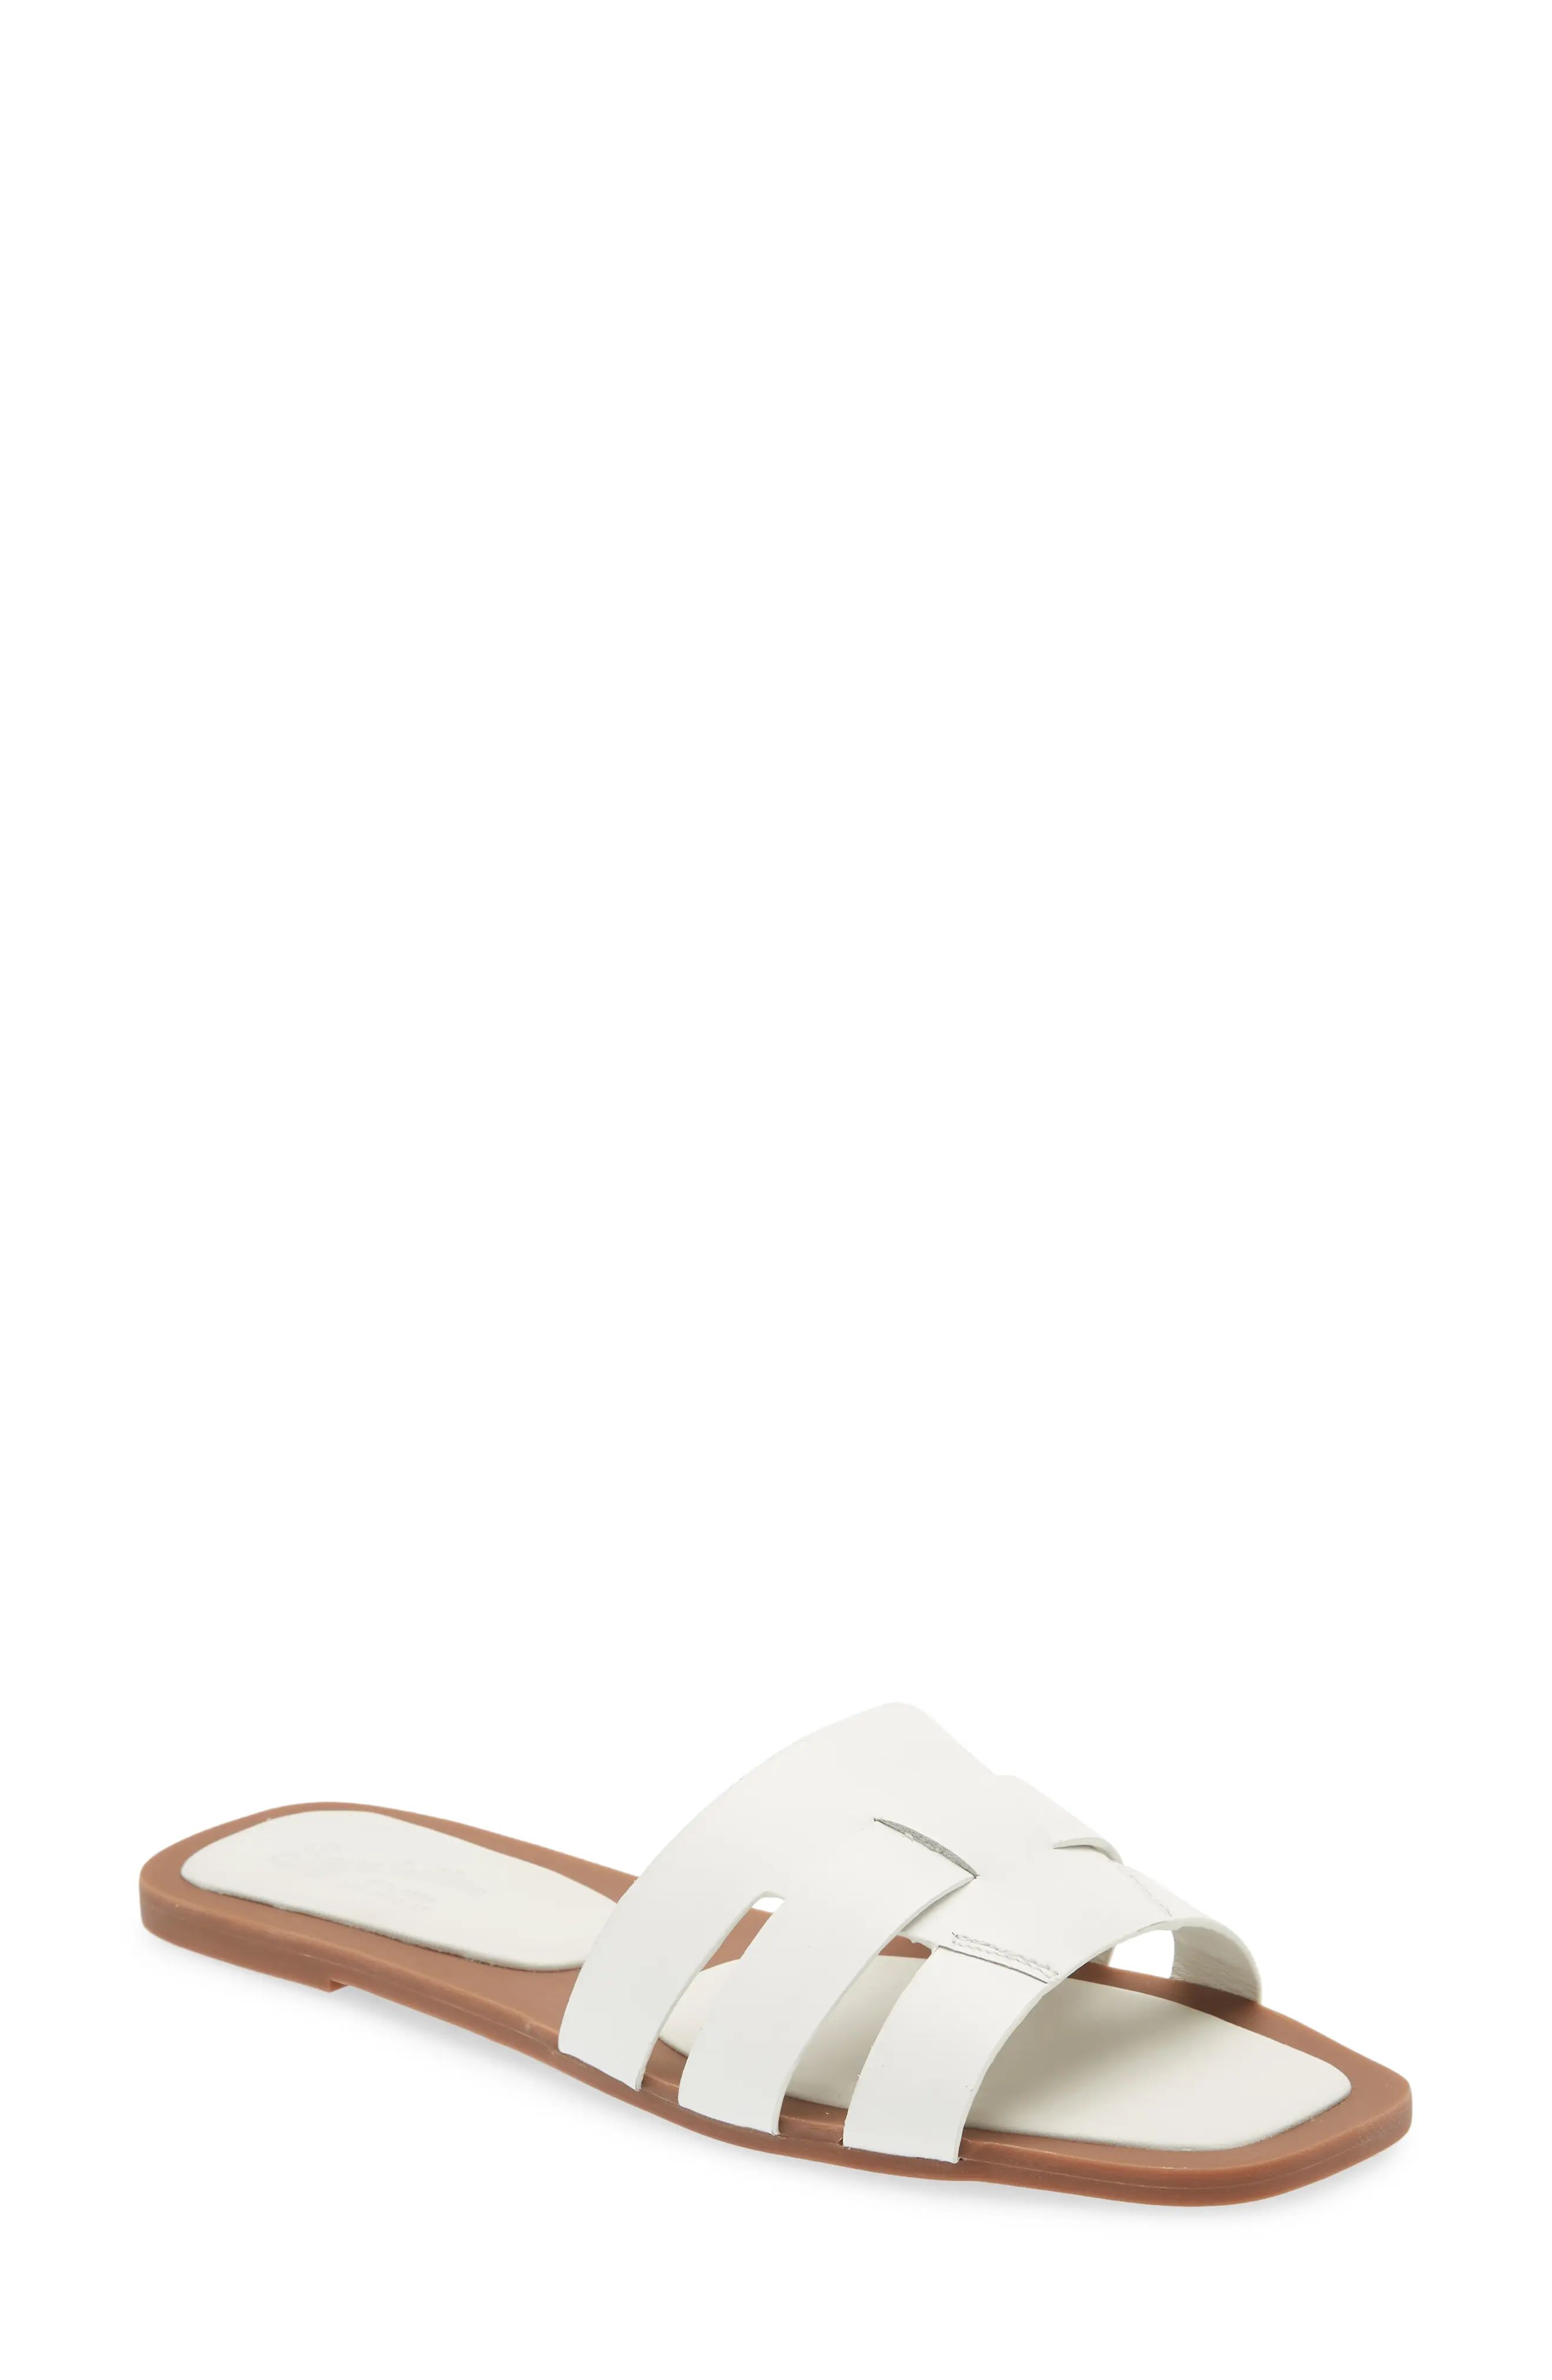 Seychelles Practically Slide Sandal in White Leather at Nordstrom, Size 9 | Nordstrom